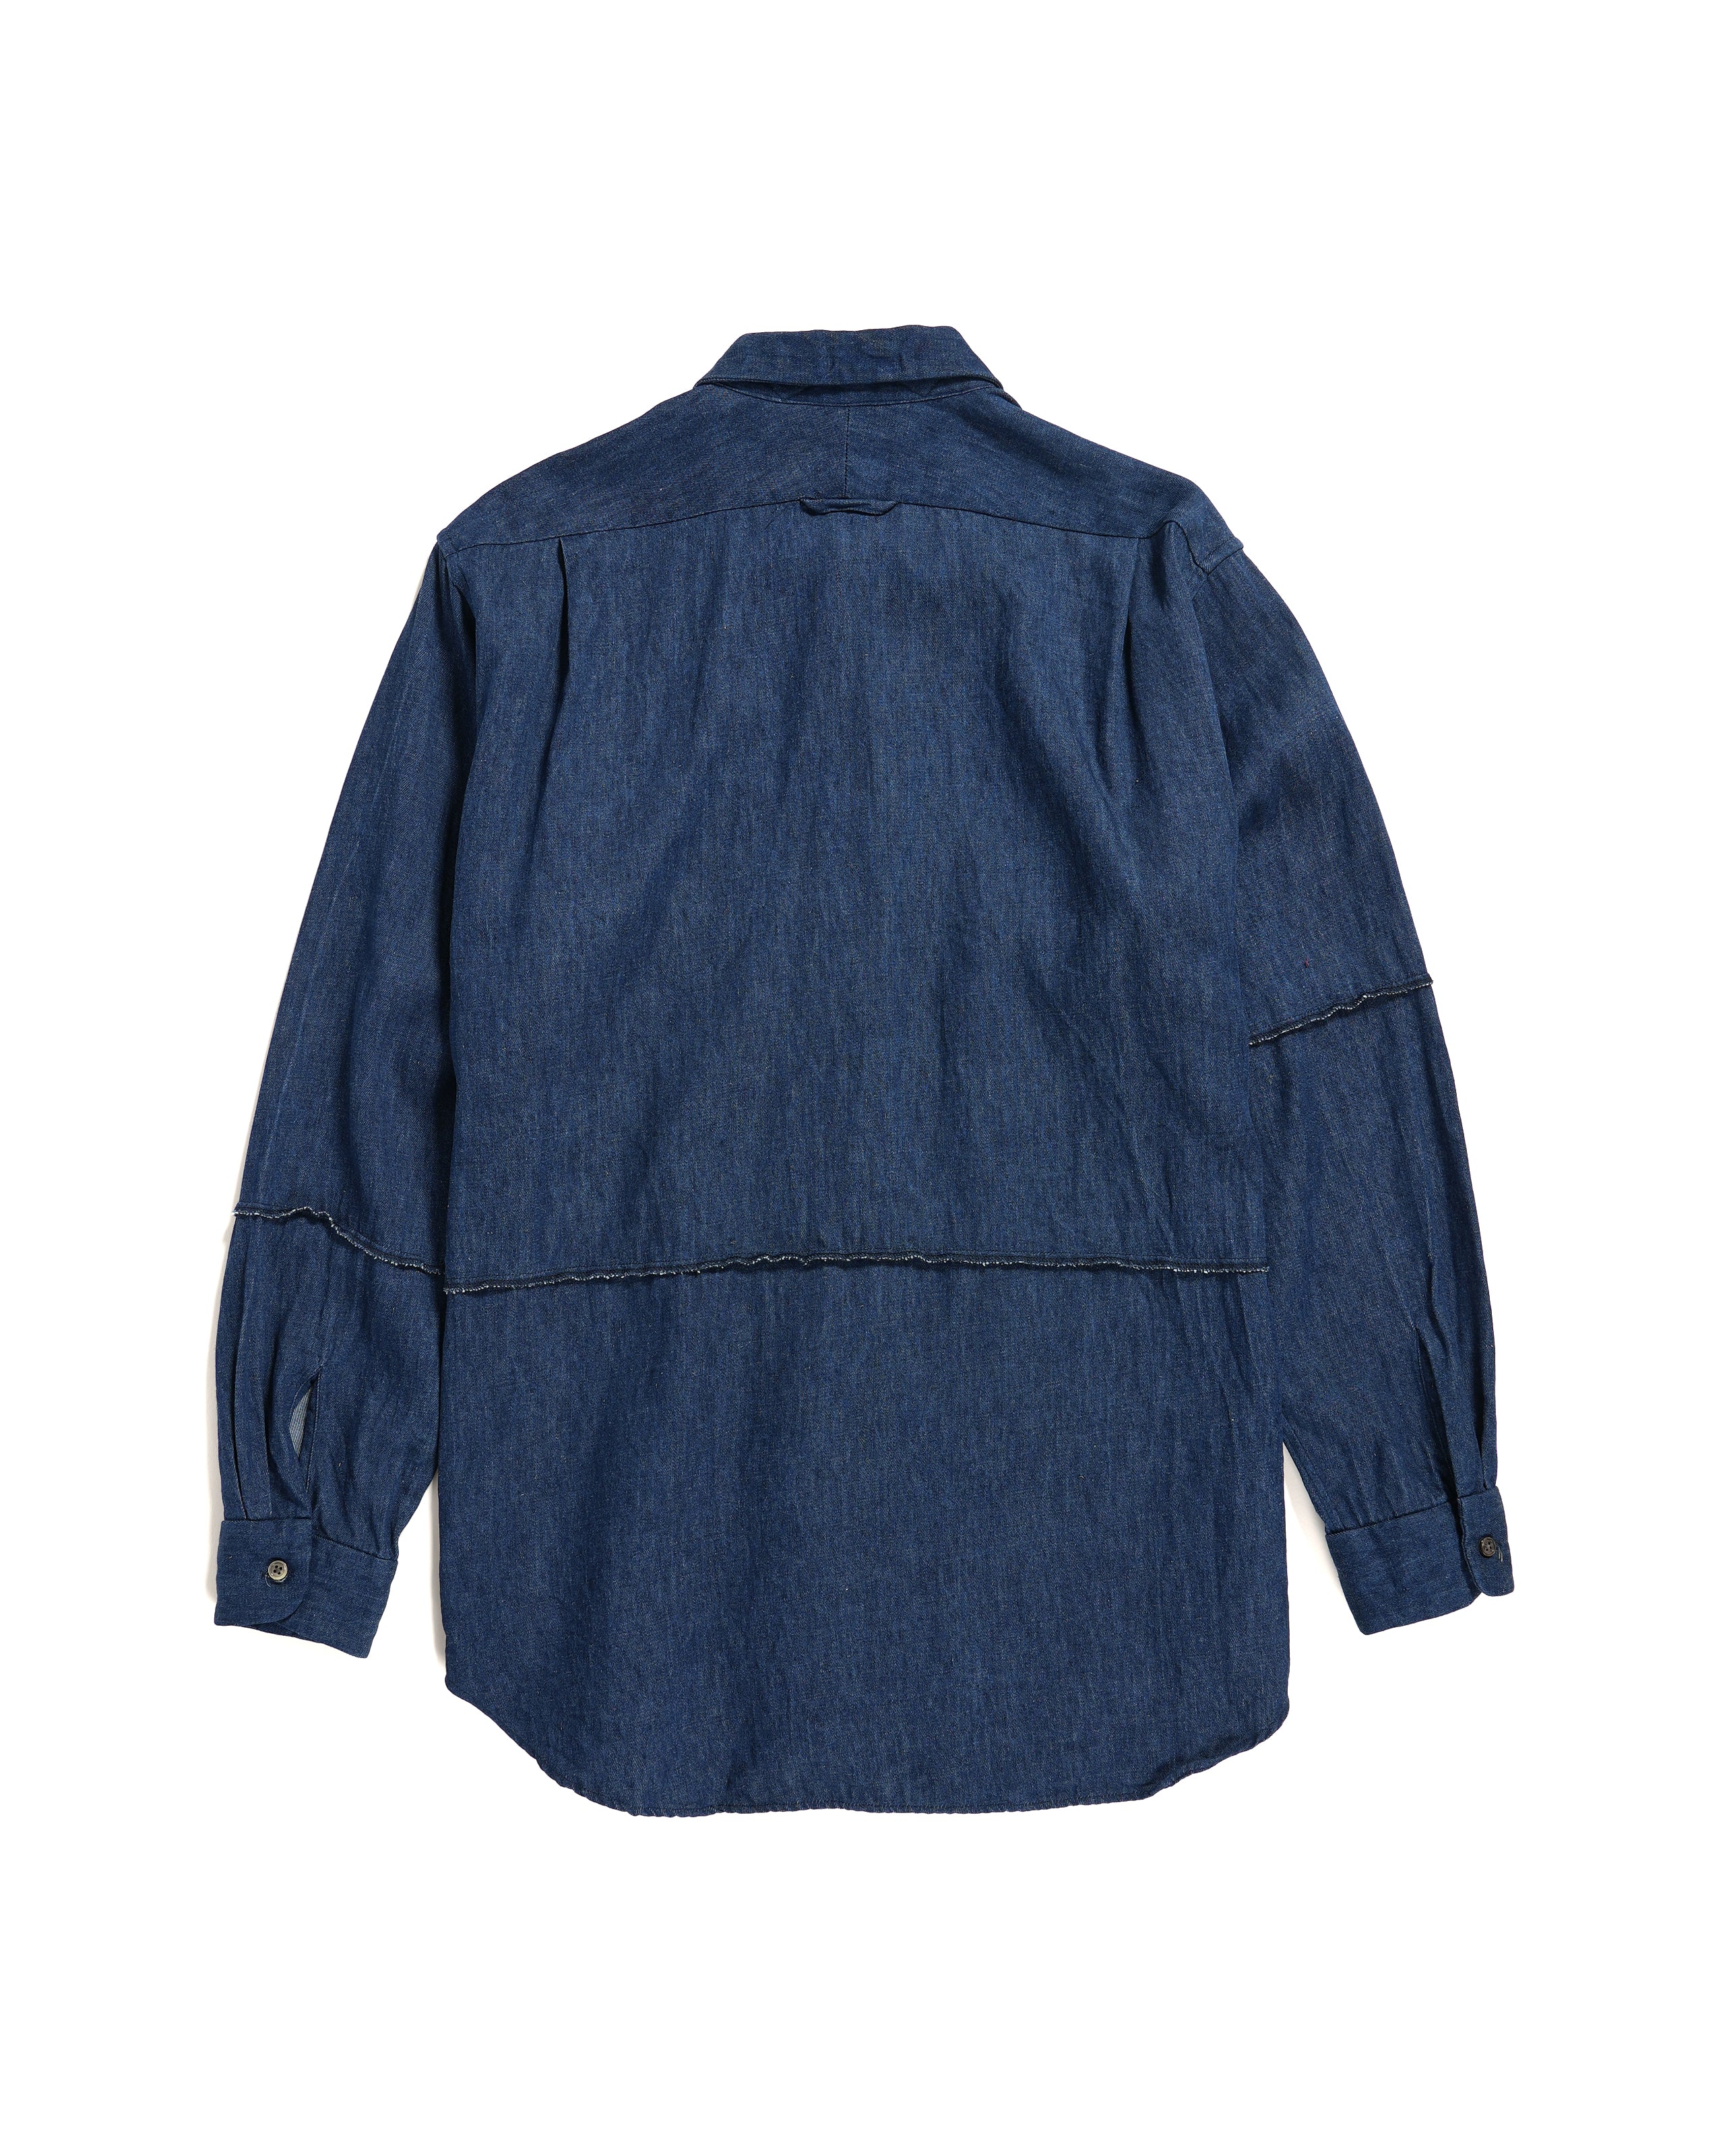 Engineered Garments Combo Short Collar Shirt - Navy Hemp Cotton Denim